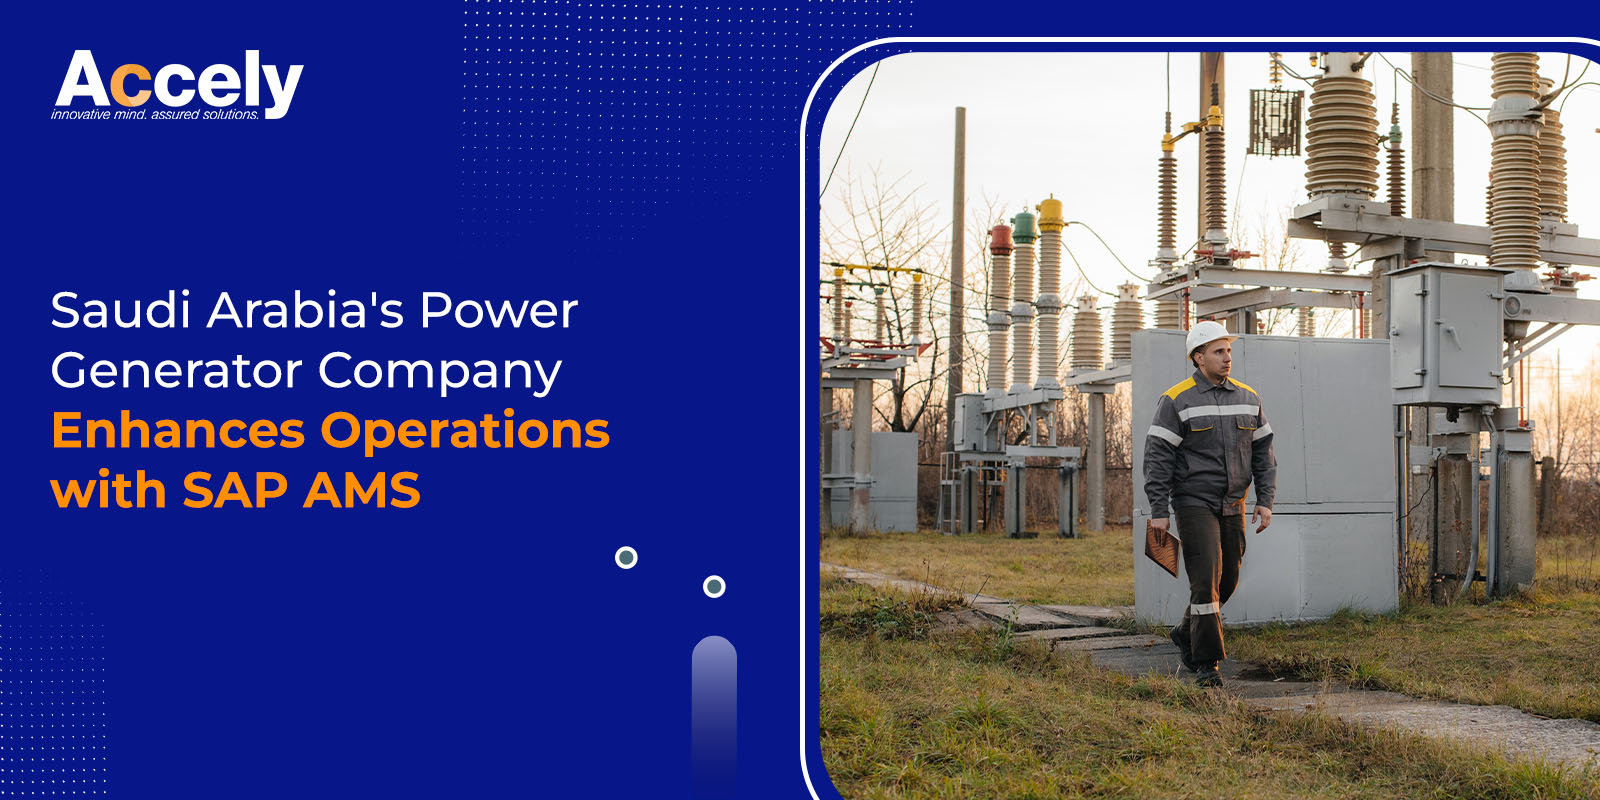 Saudi Arabia's Power Generator Company Enhances Operations with SAP AMS